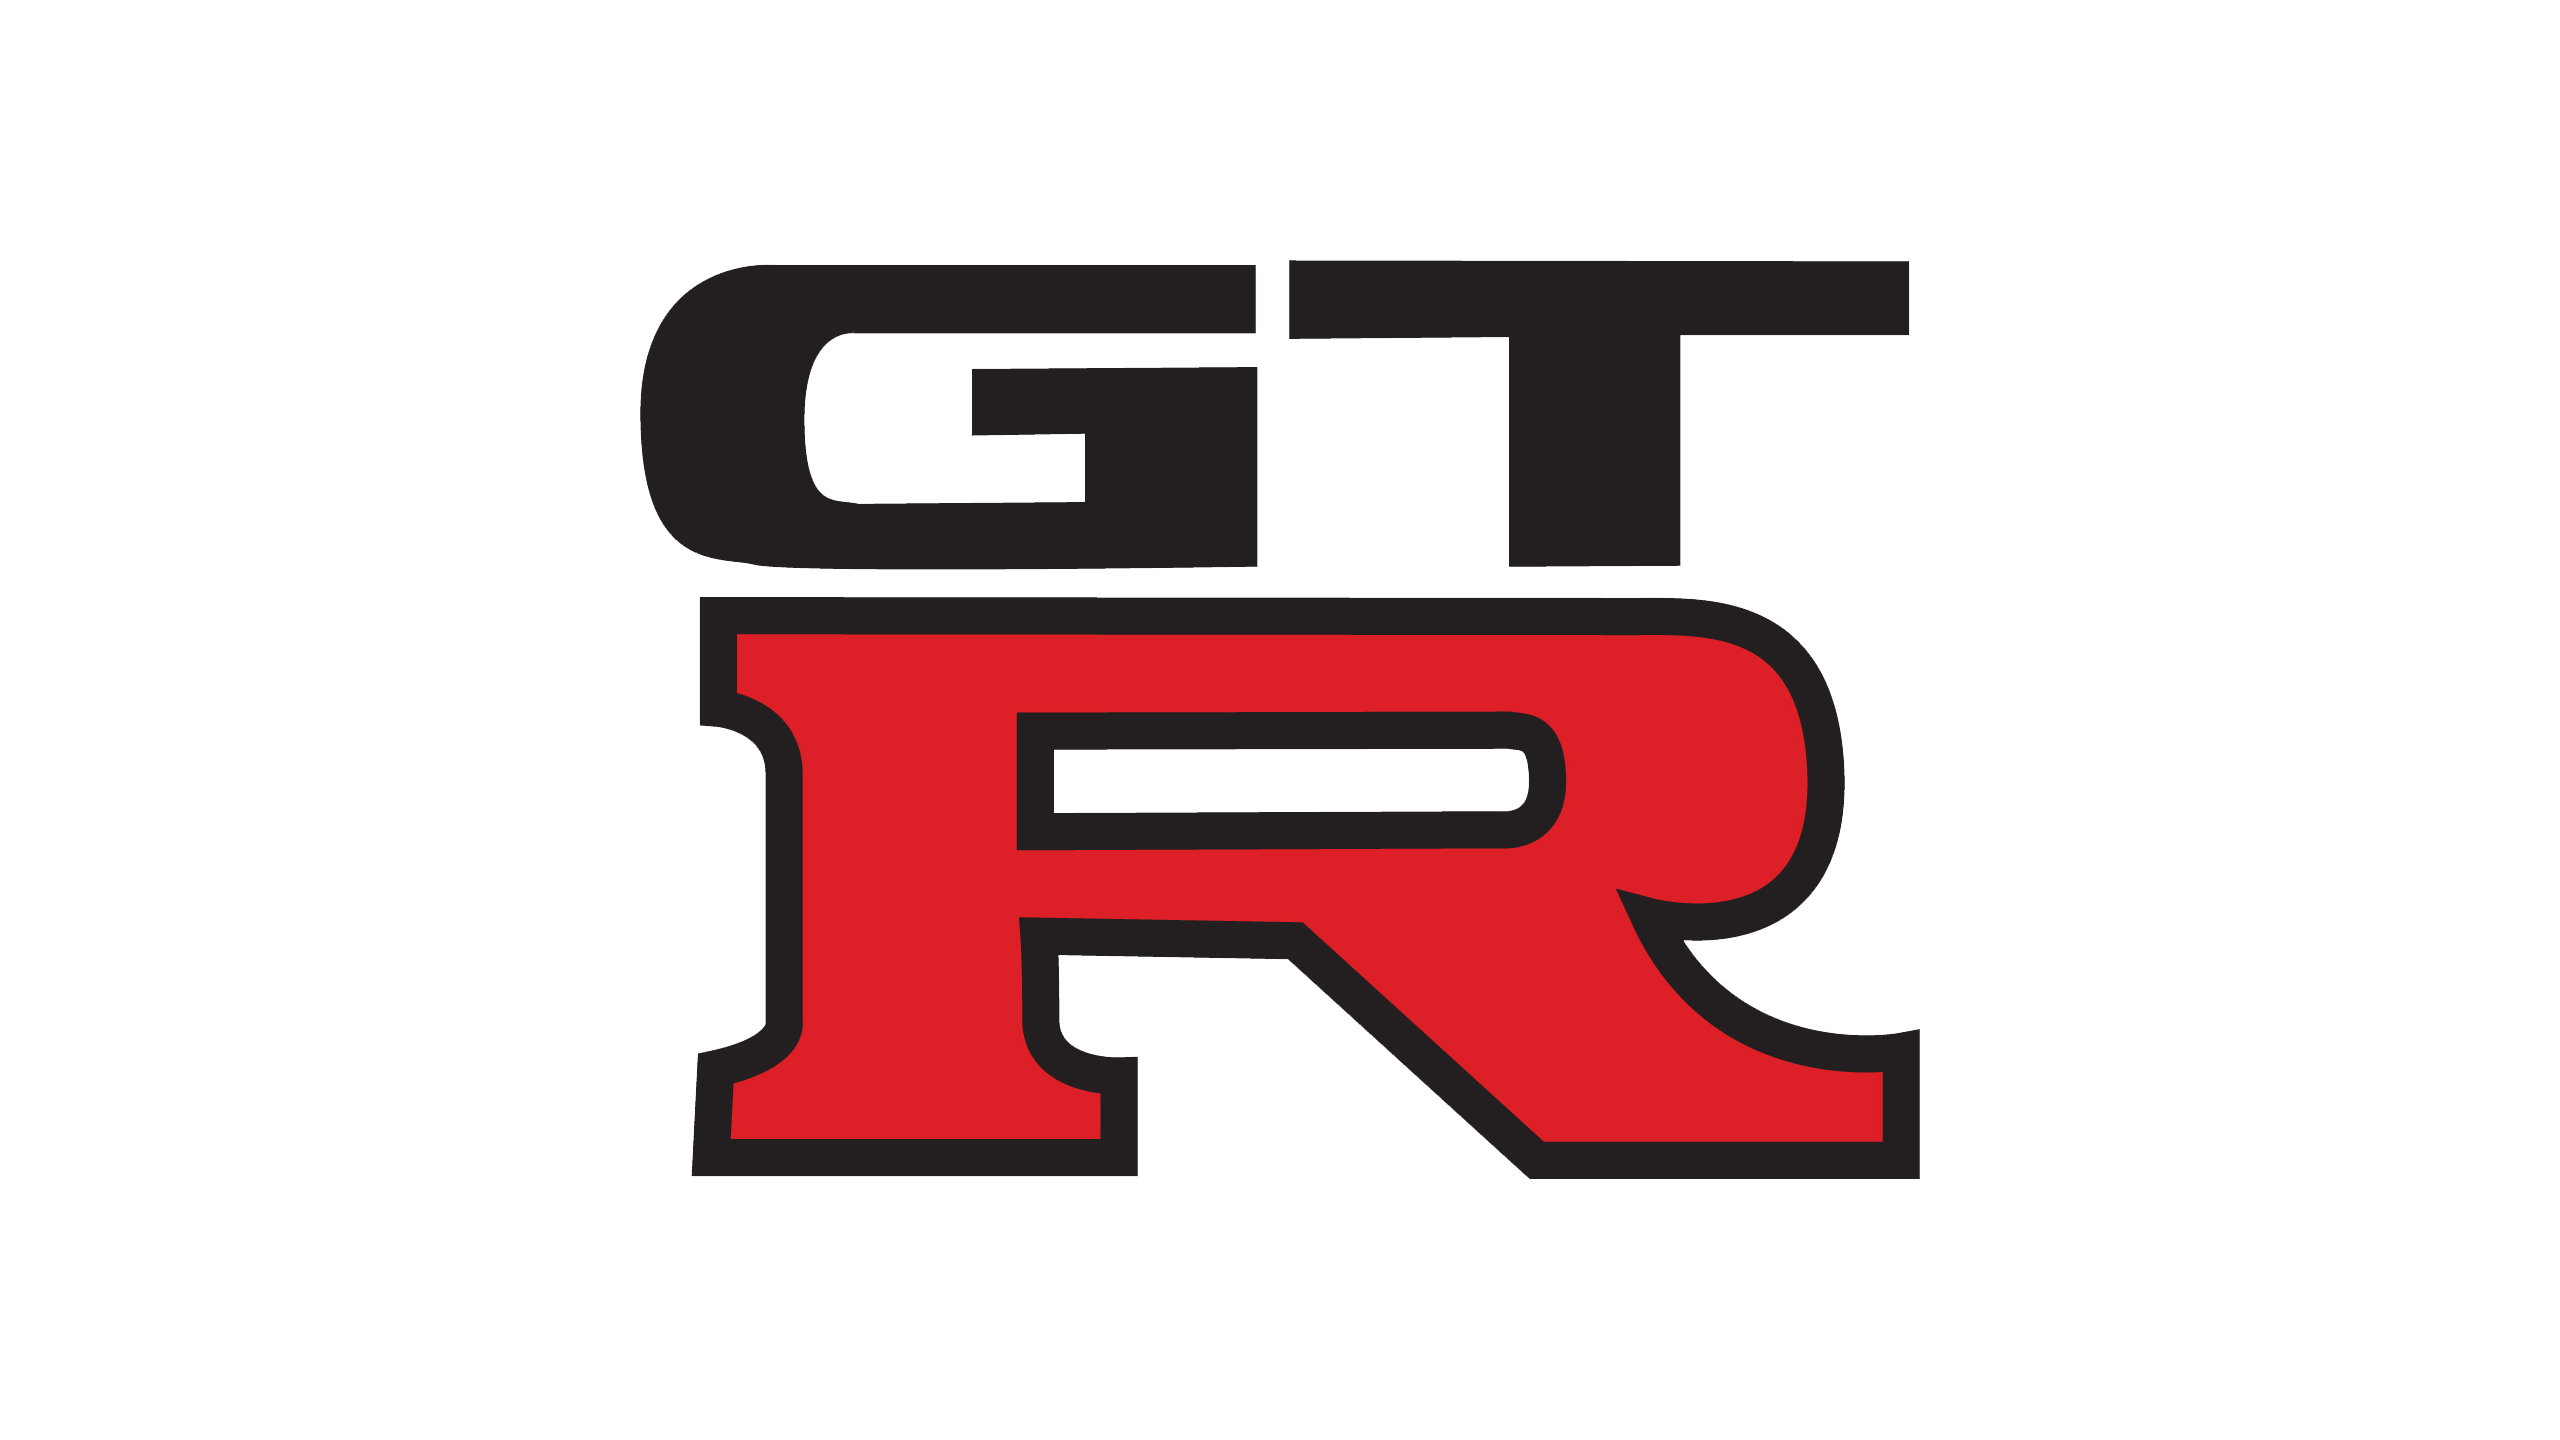 regain versus maintain Nissan GT-R logo, HD Png, Information